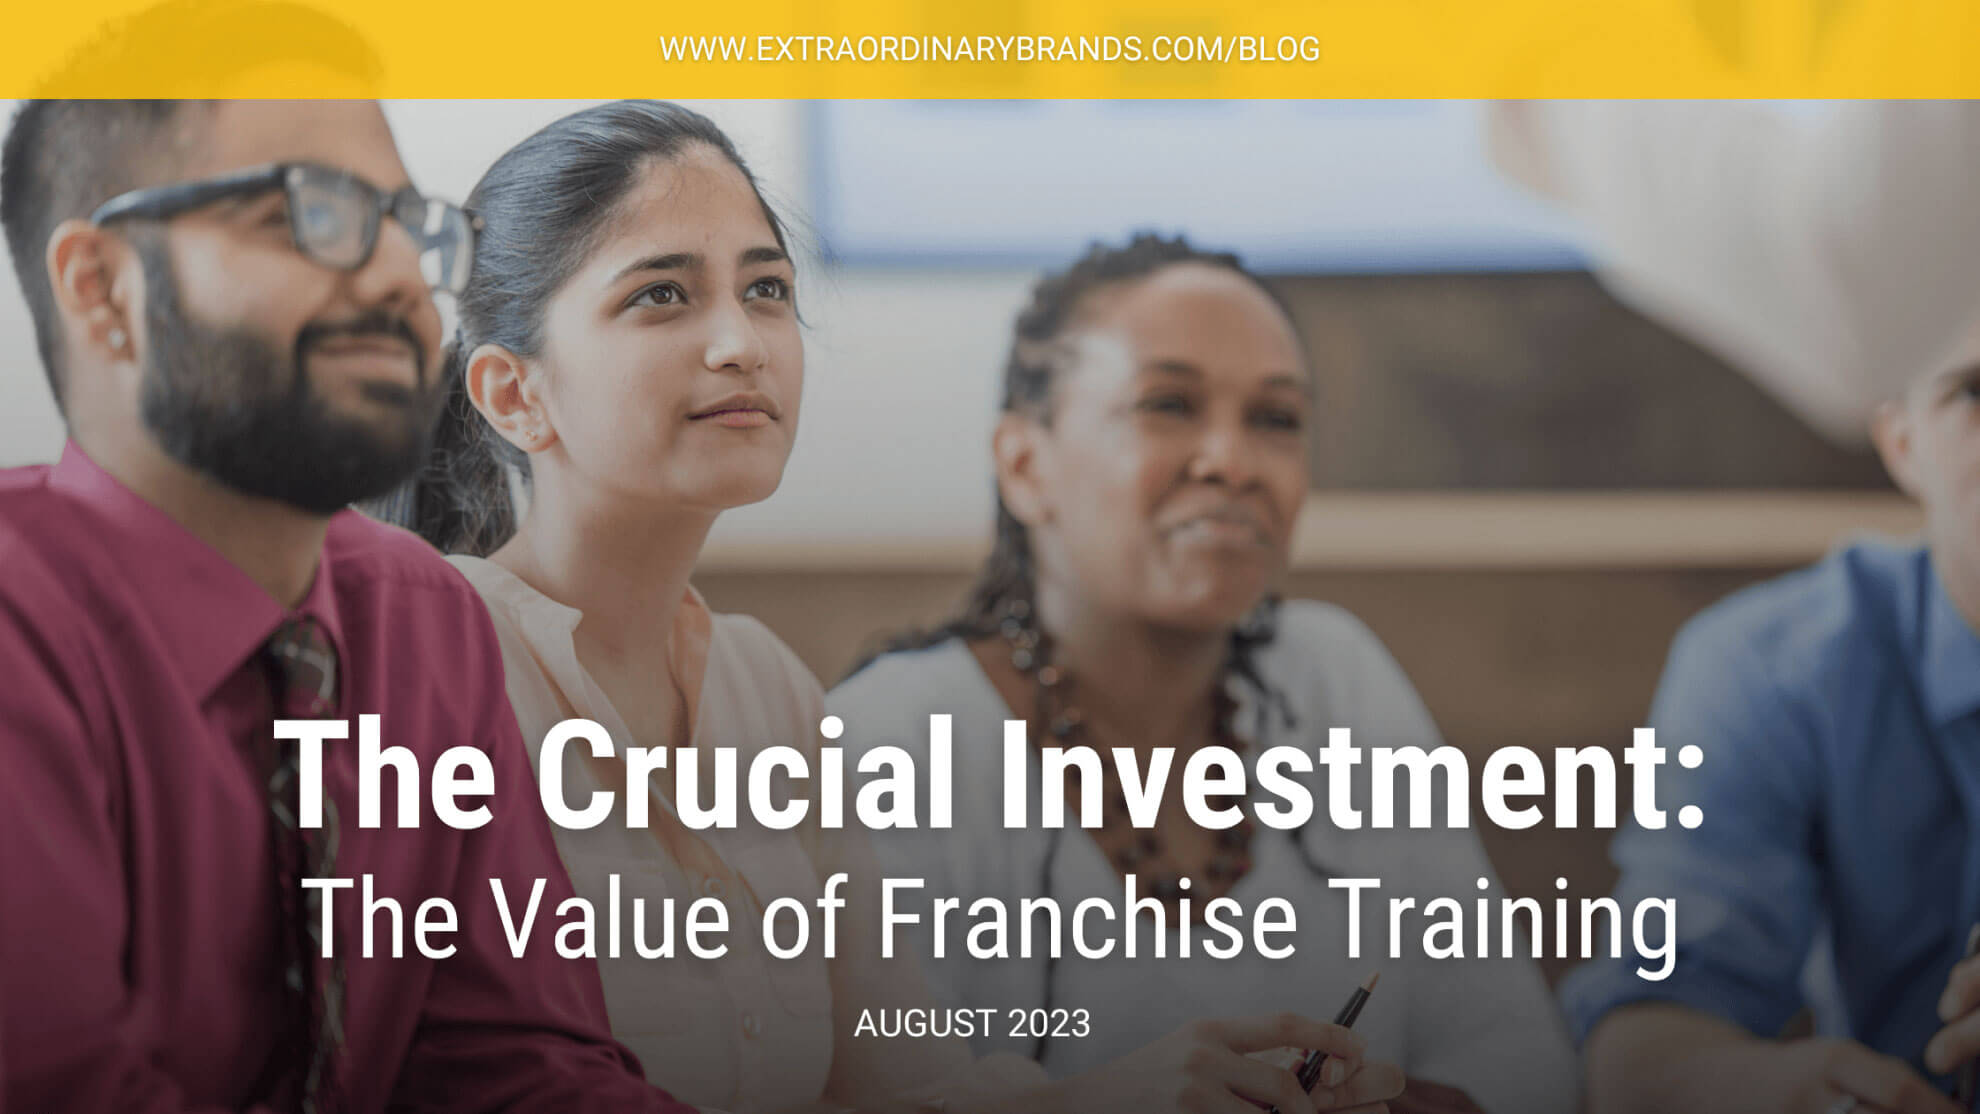 The value of franchise training